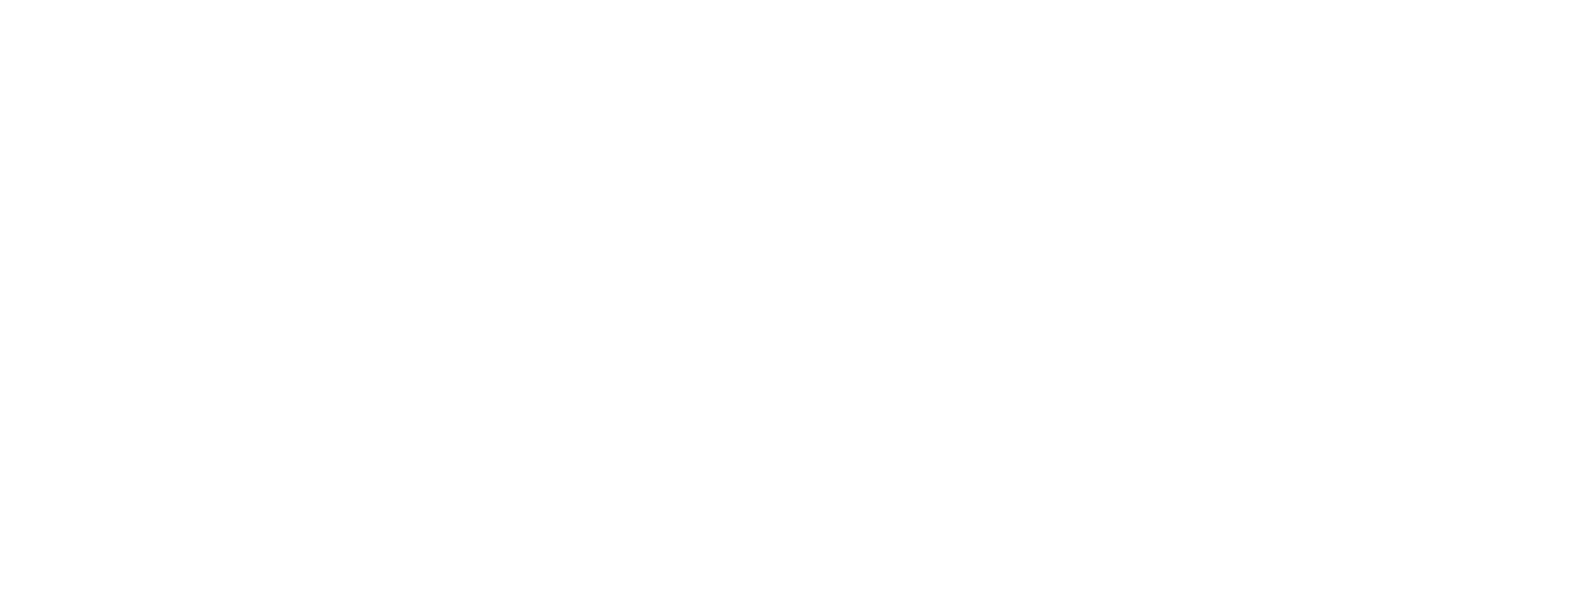 Phillips Edison & Company logo large for dark backgrounds (transparent PNG)